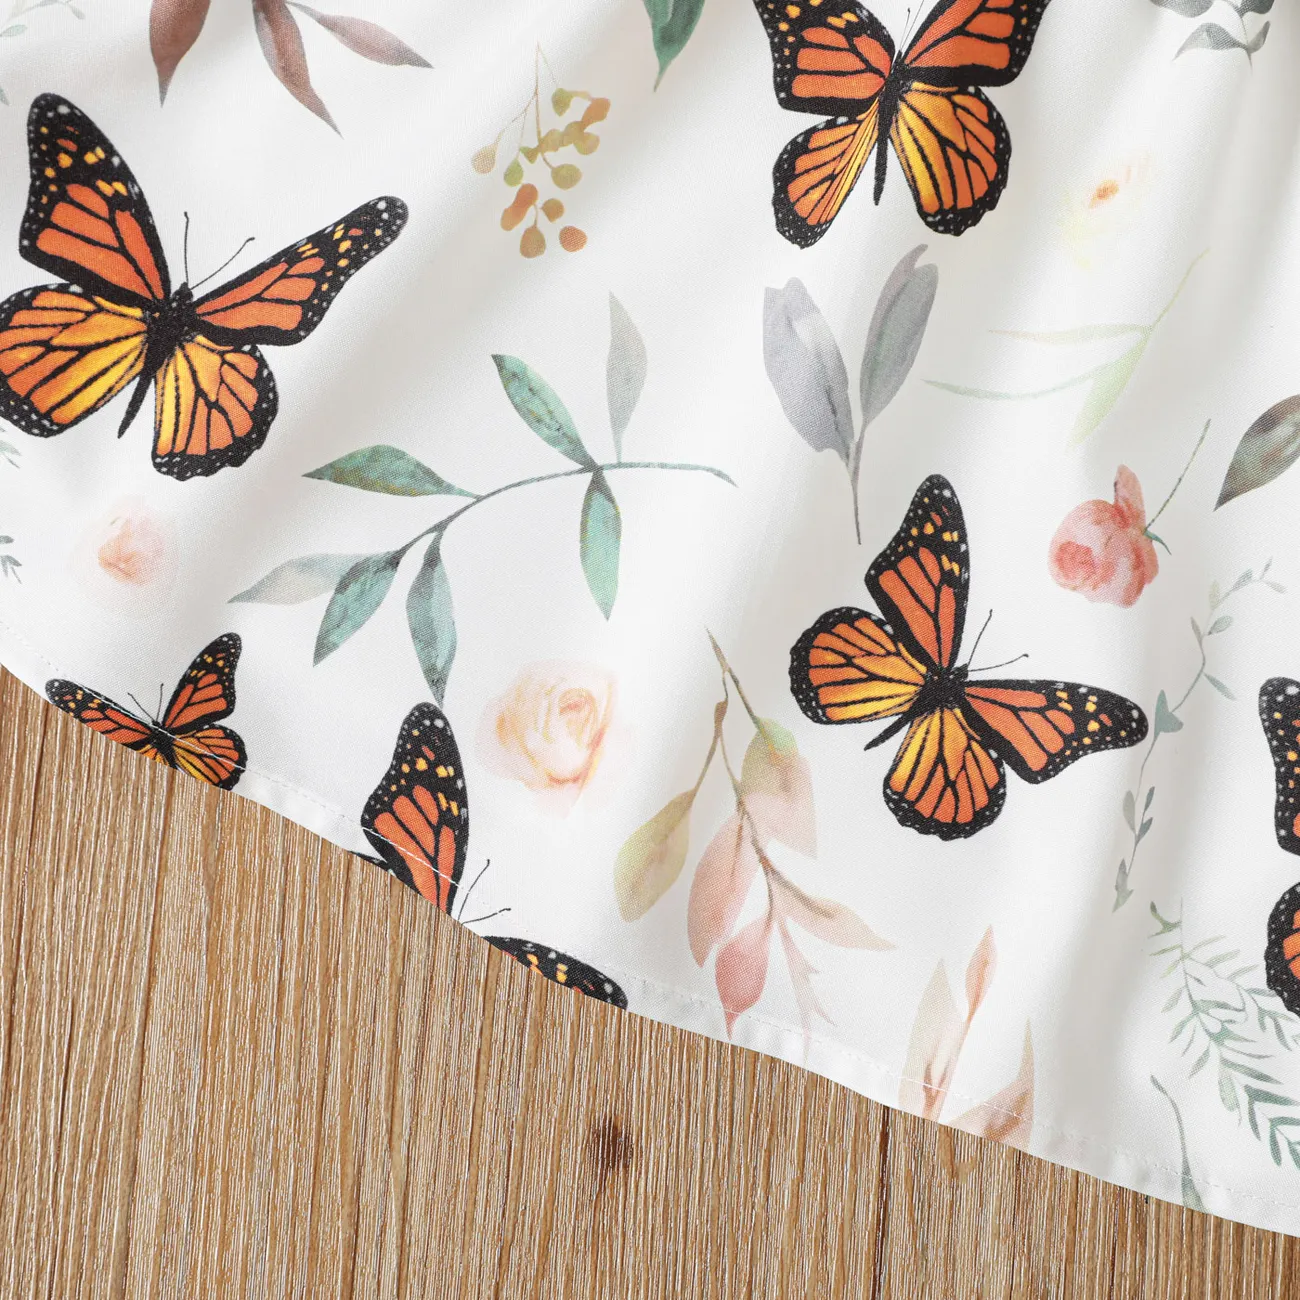 Toddler Girl Floral Leaf/Butterfly Print Splice Bowknot Design Long-sleeve Dress Brown big image 1